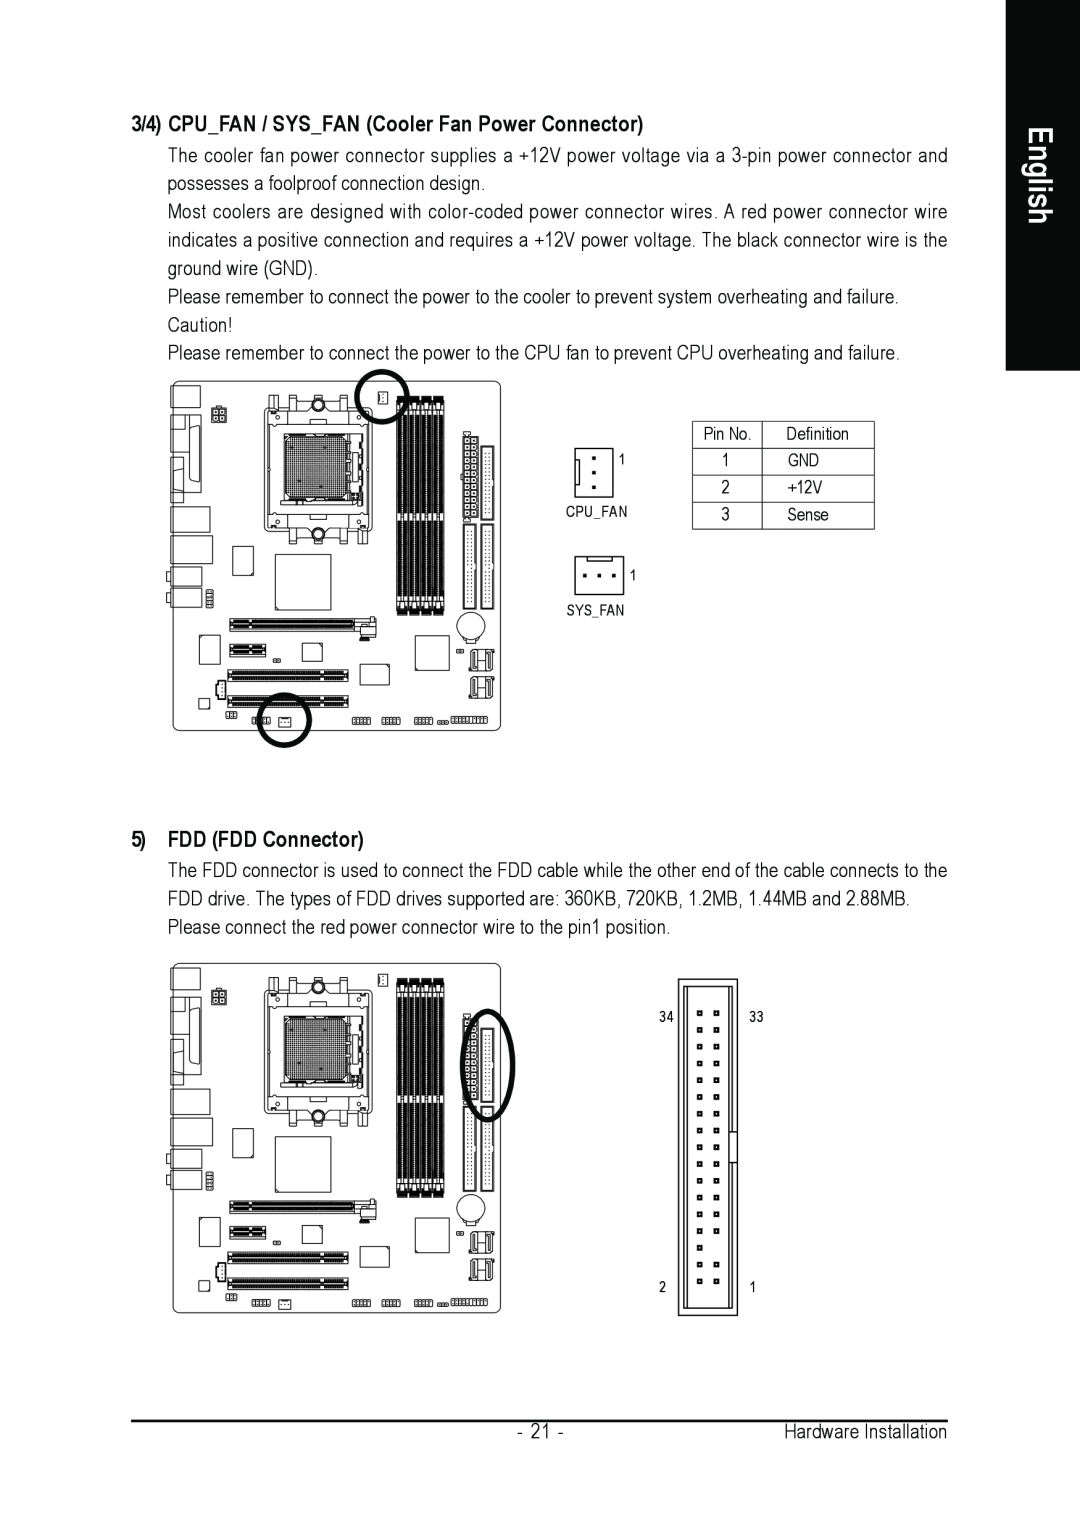 Gigabyte GA-K8N51PVMT-9-RH user manual 3/4 CPUFAN / SYSFAN Cooler Fan Power Connector, FDD FDD Connector, English 